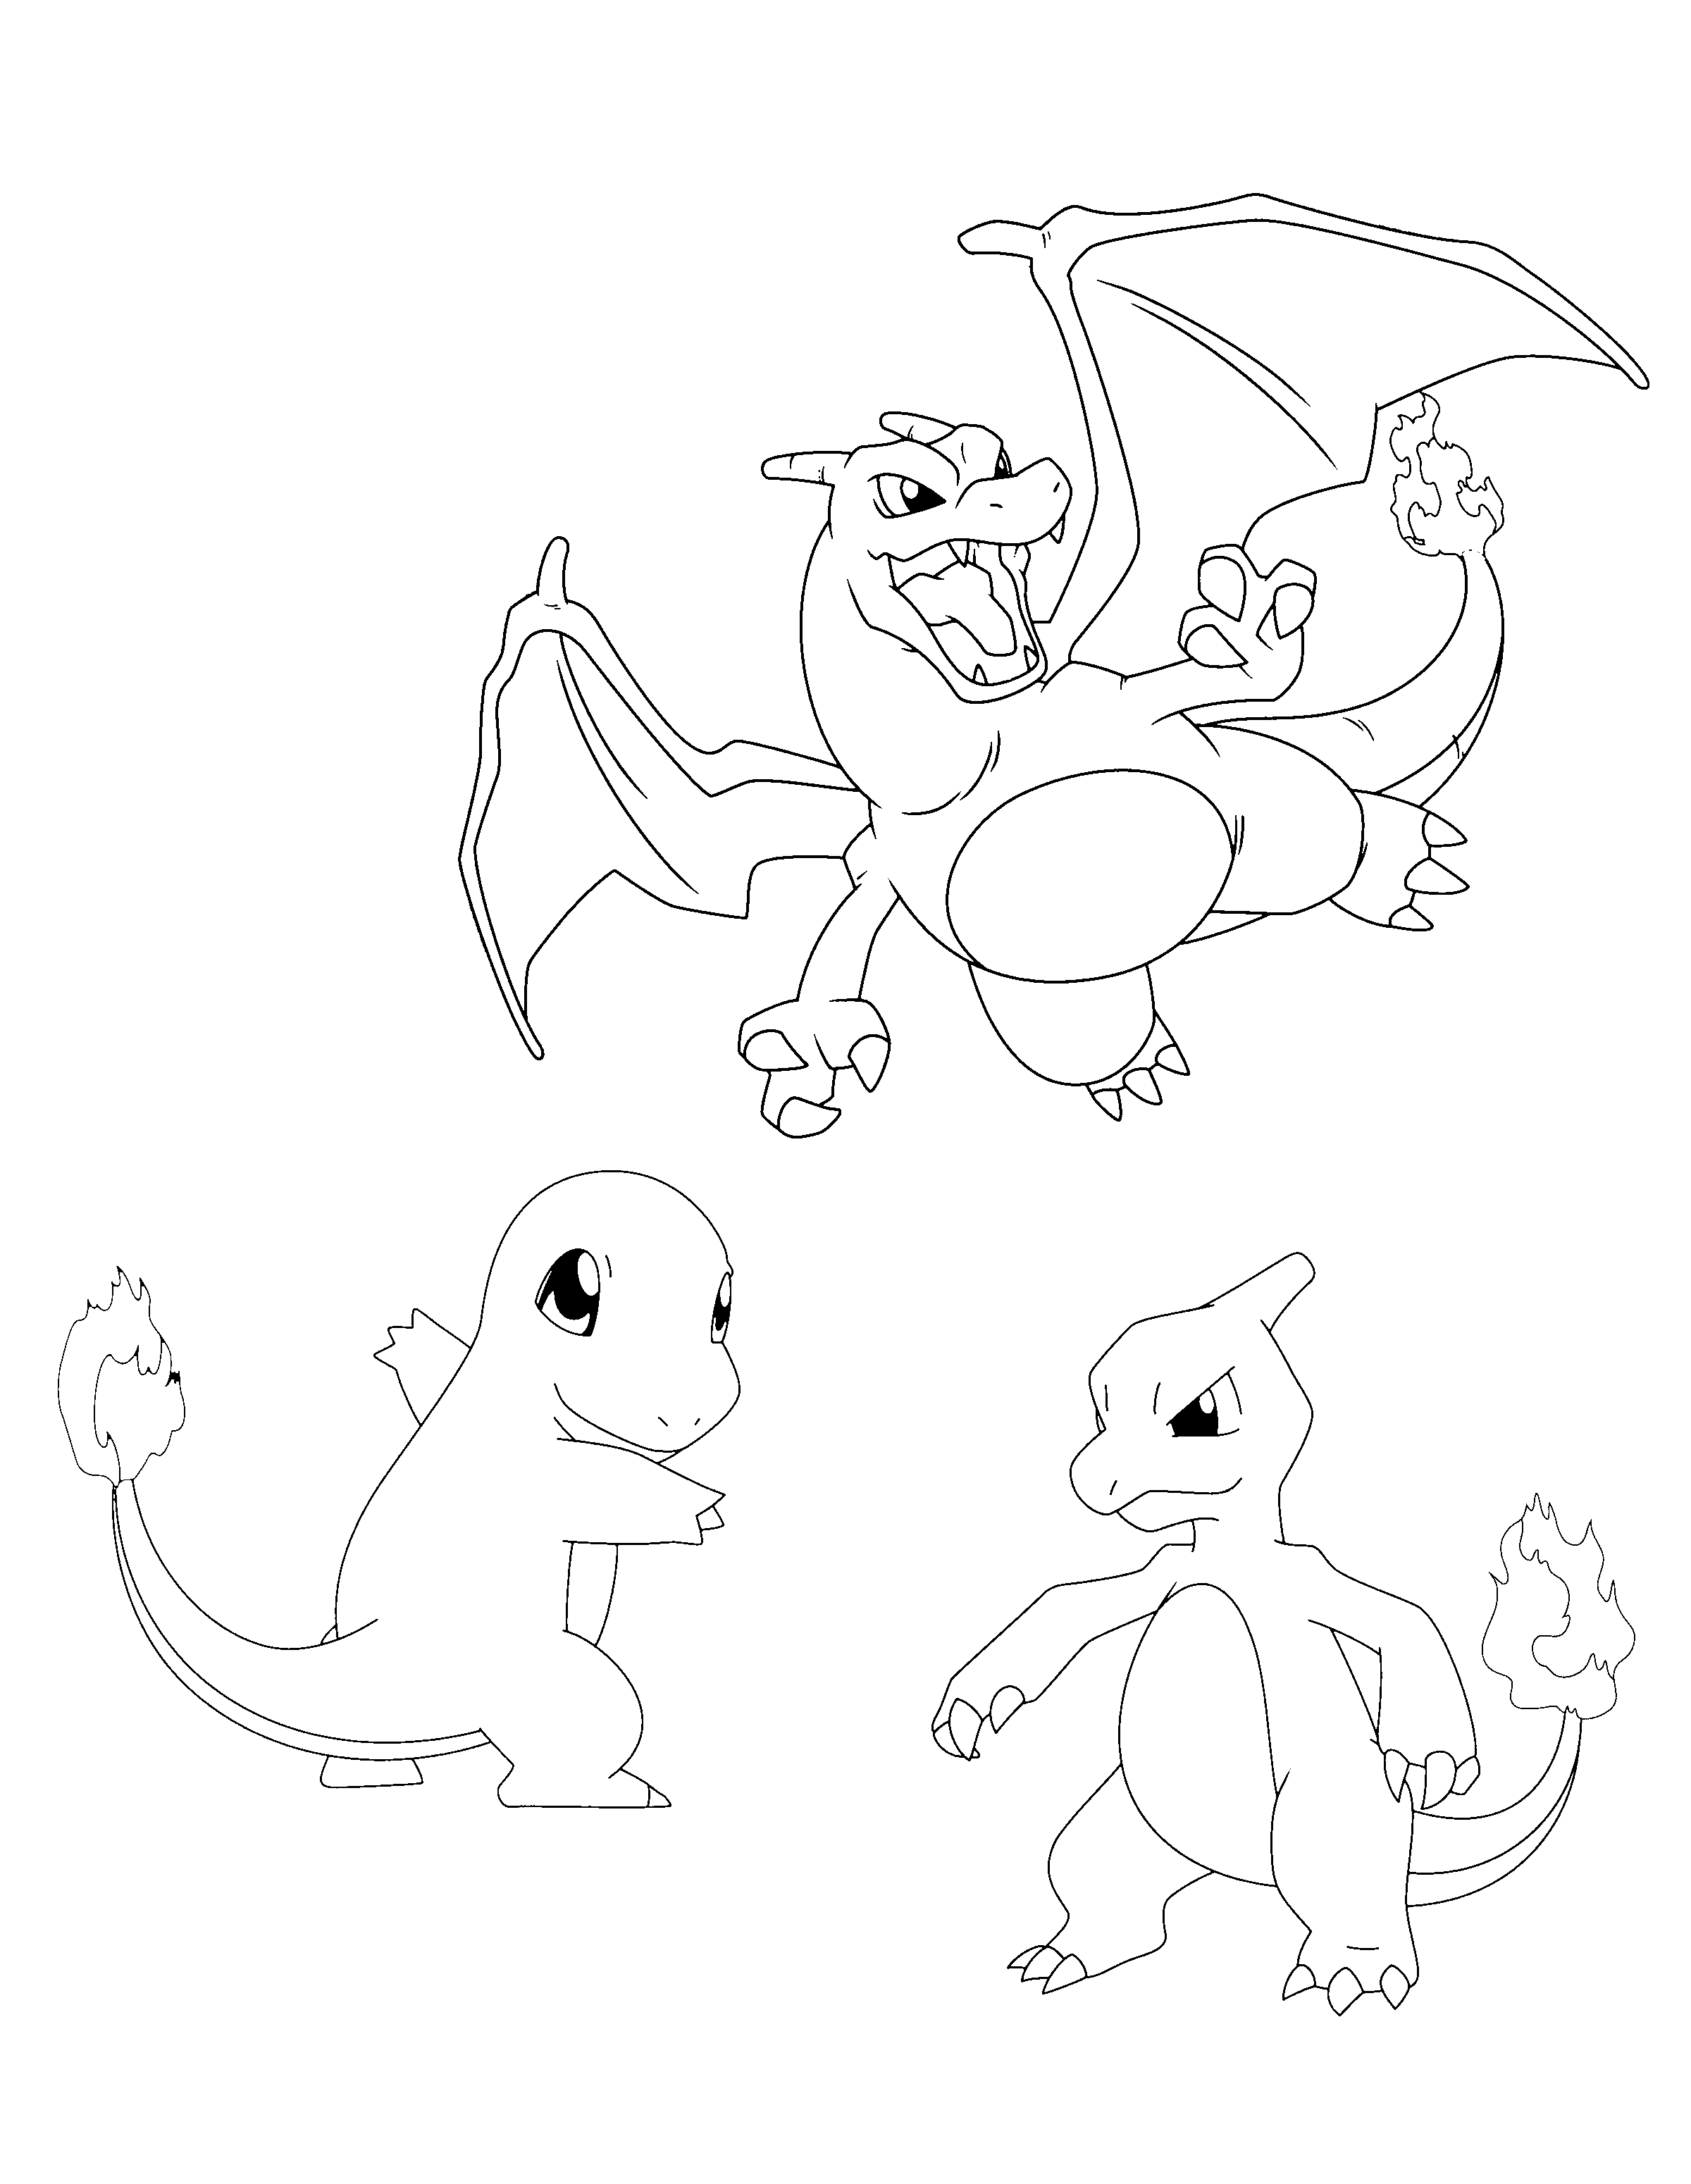 coloriage pokemon - coloriage carte pokemon ex et gx